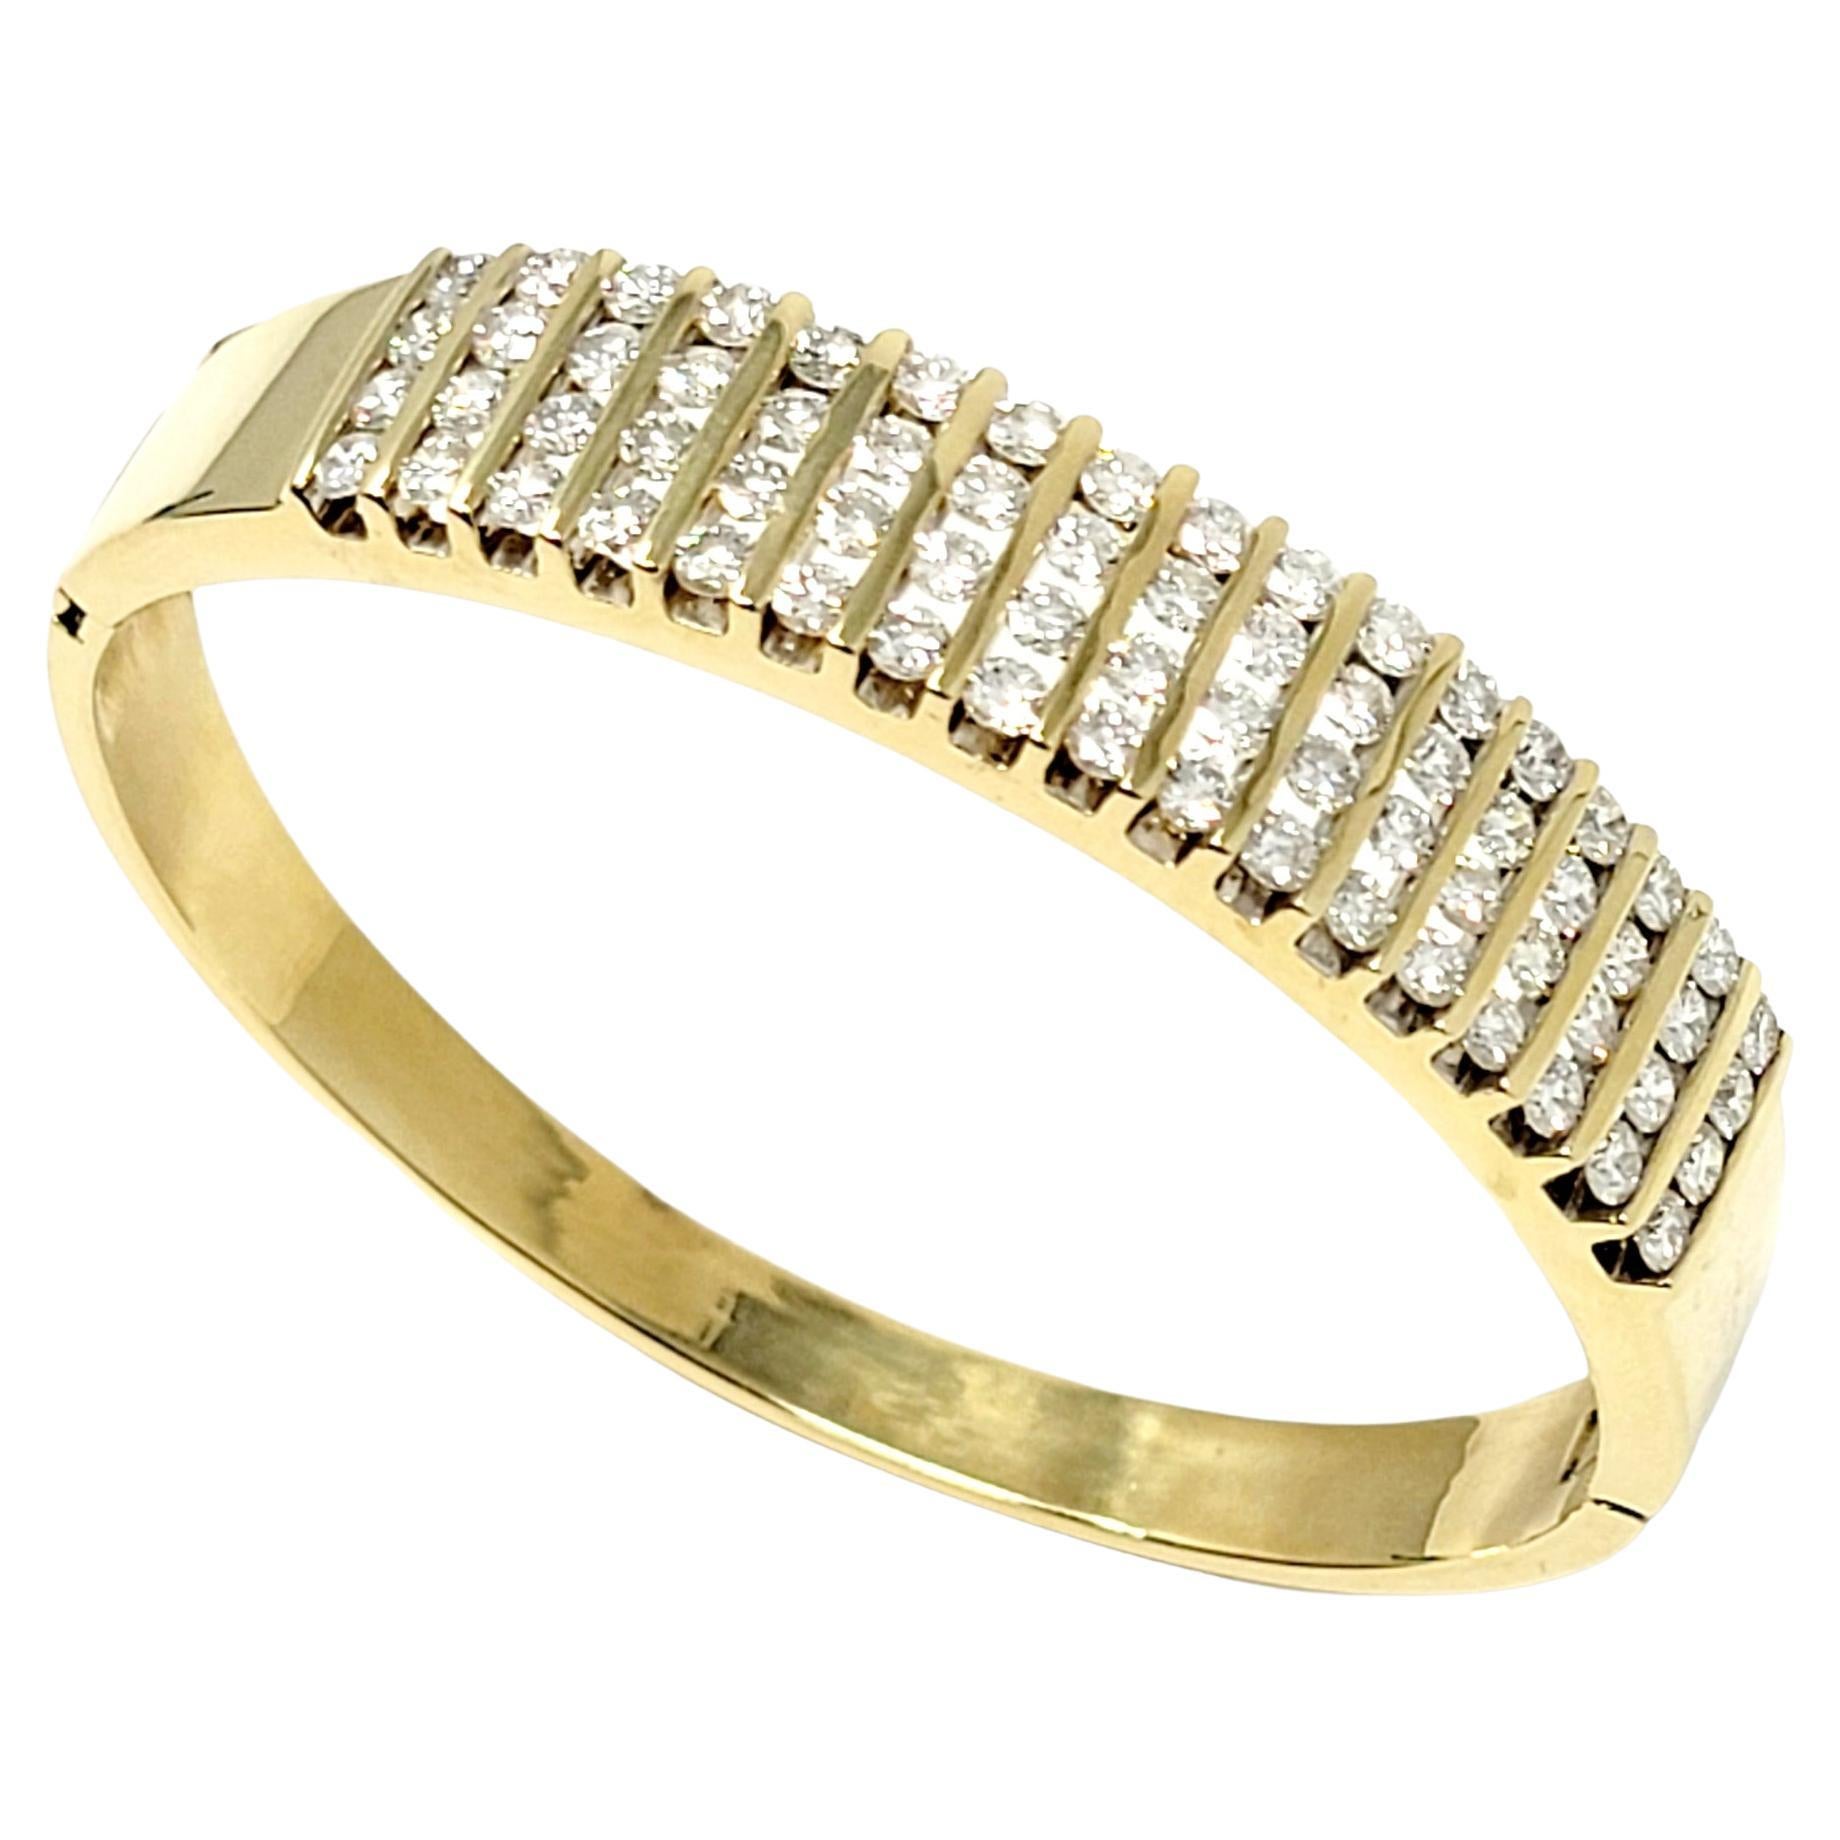 Channel Set Round Diamond Bangle Bracelet 5.50 Carats Total 14 Karat Yellow Gold